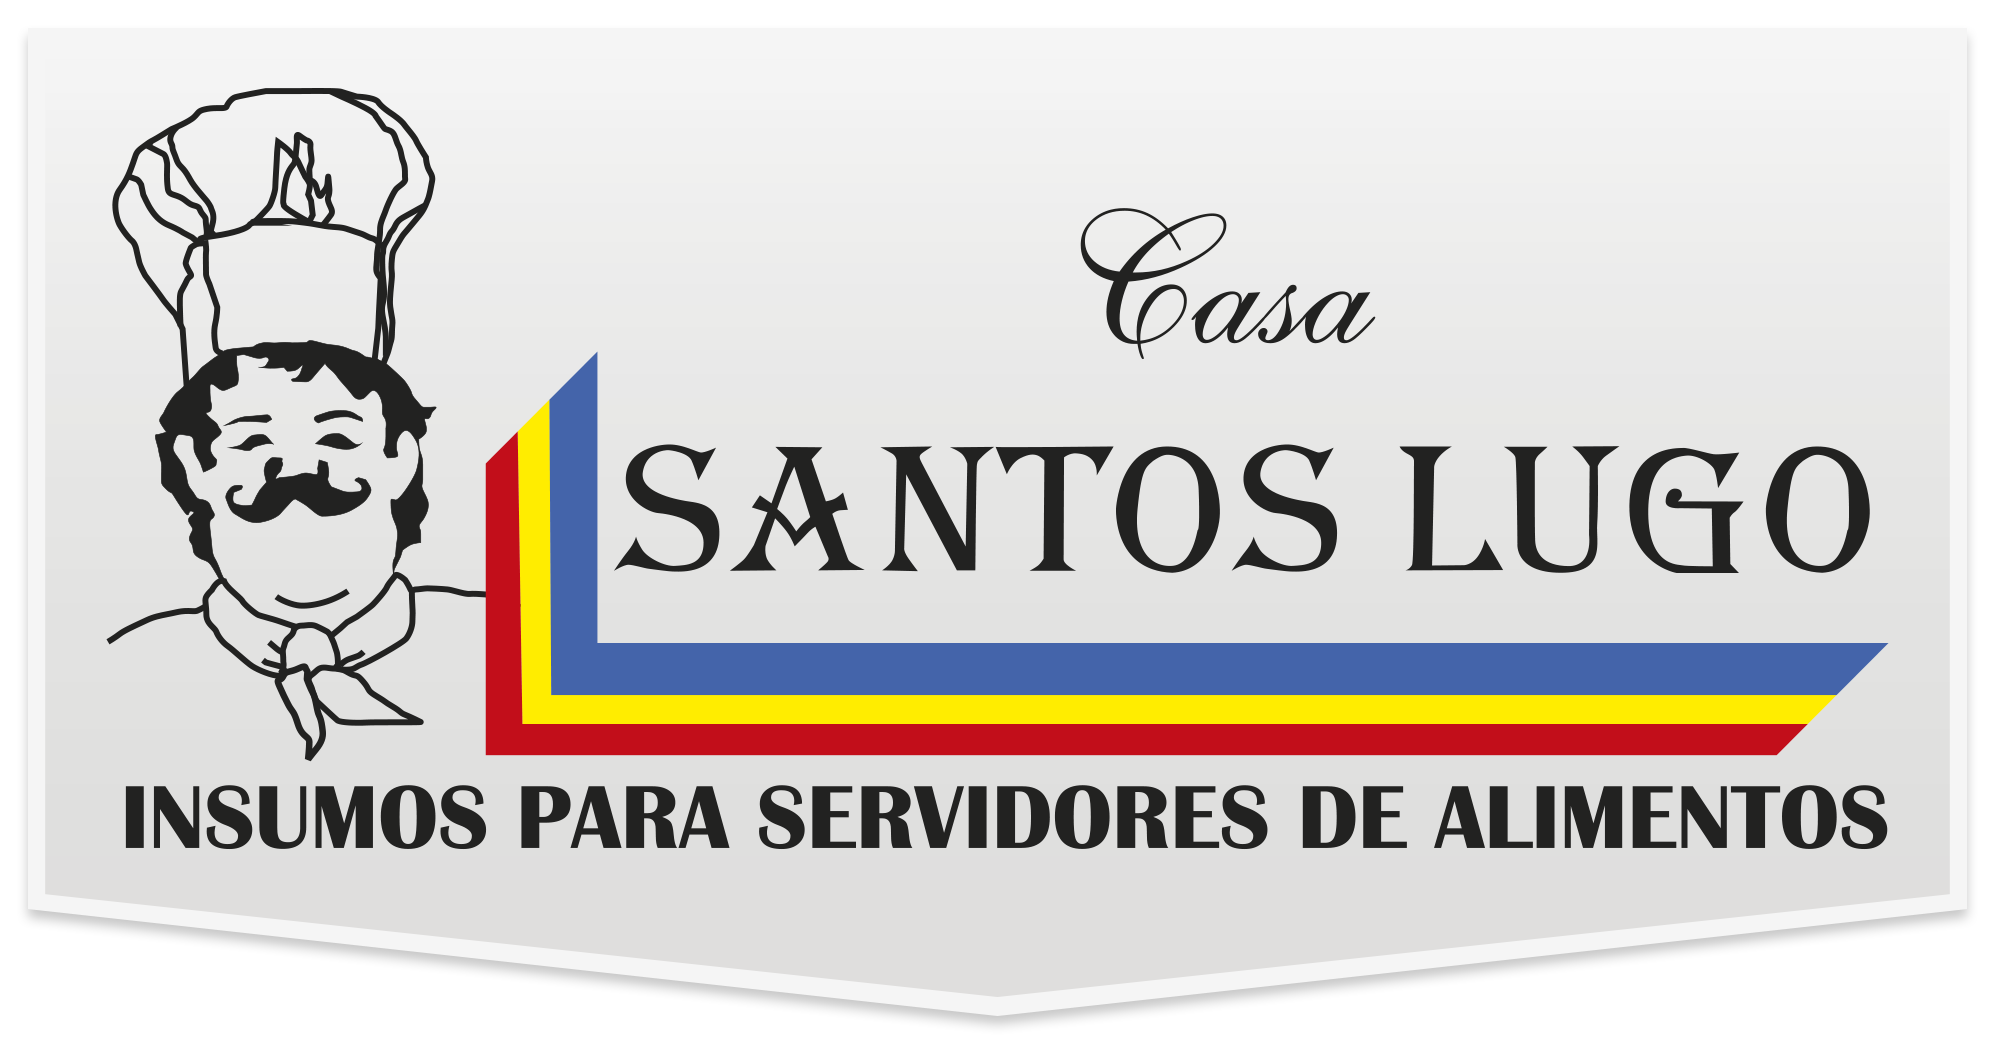 Santos Lugo | Categoría Despensa